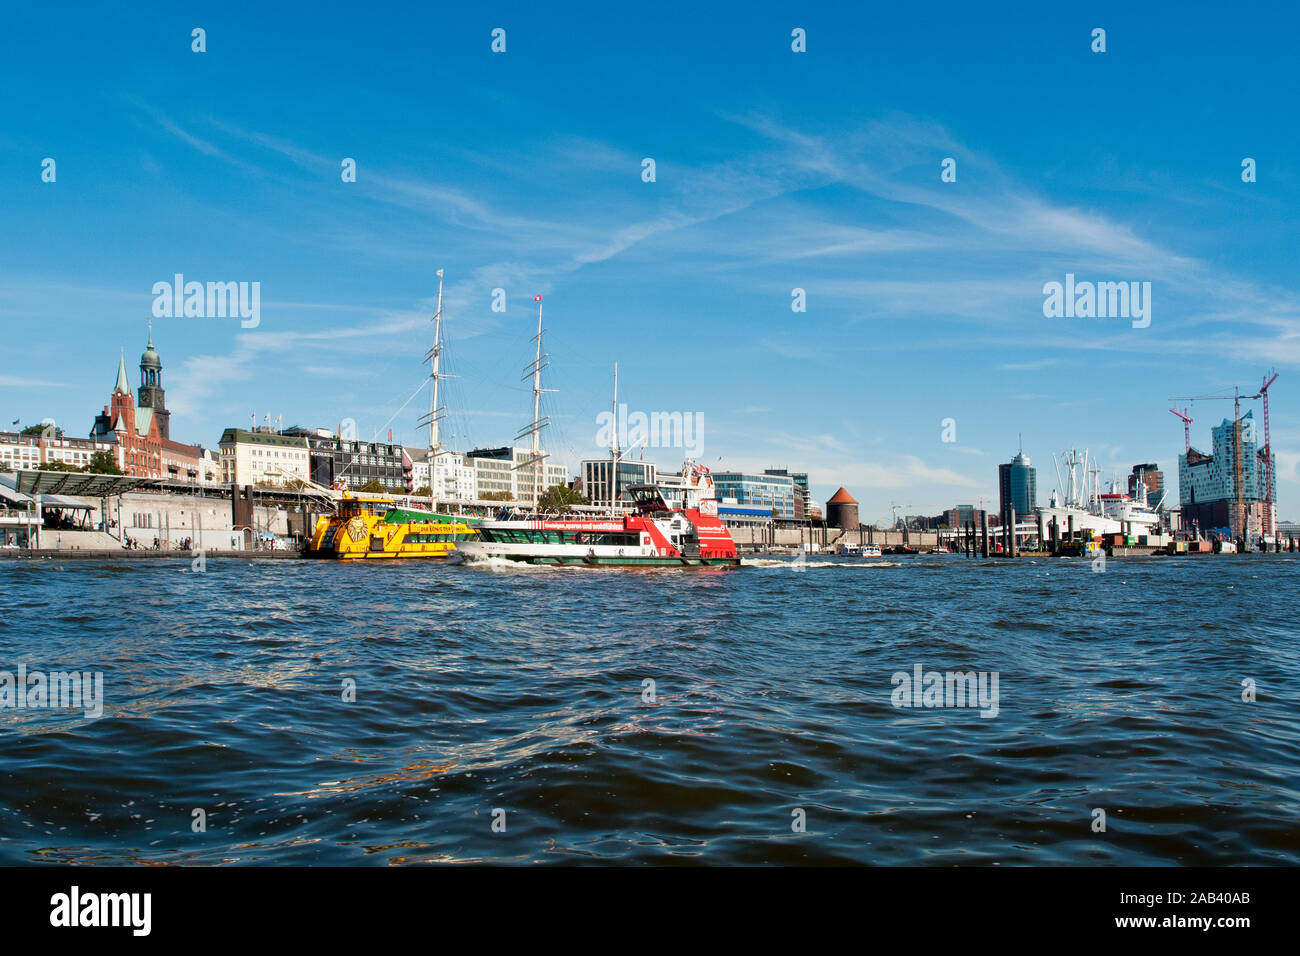 Blick auf die Landungsbrücken im Hamburger Hafen |Guarda i Ponti di Sbarco del porto di Amburgo| Foto Stock